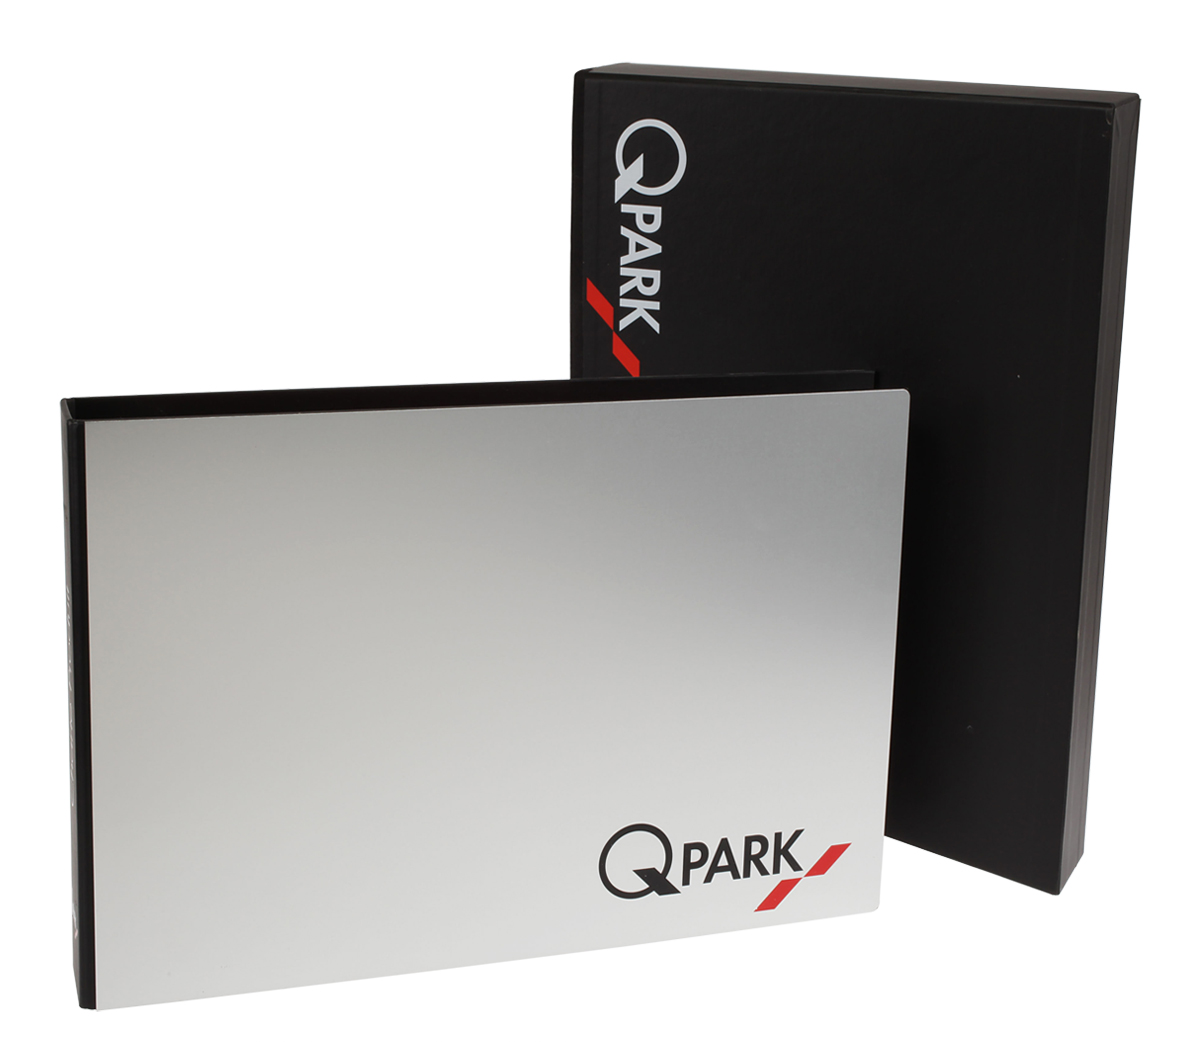 Q Park - corporate guidelines folder